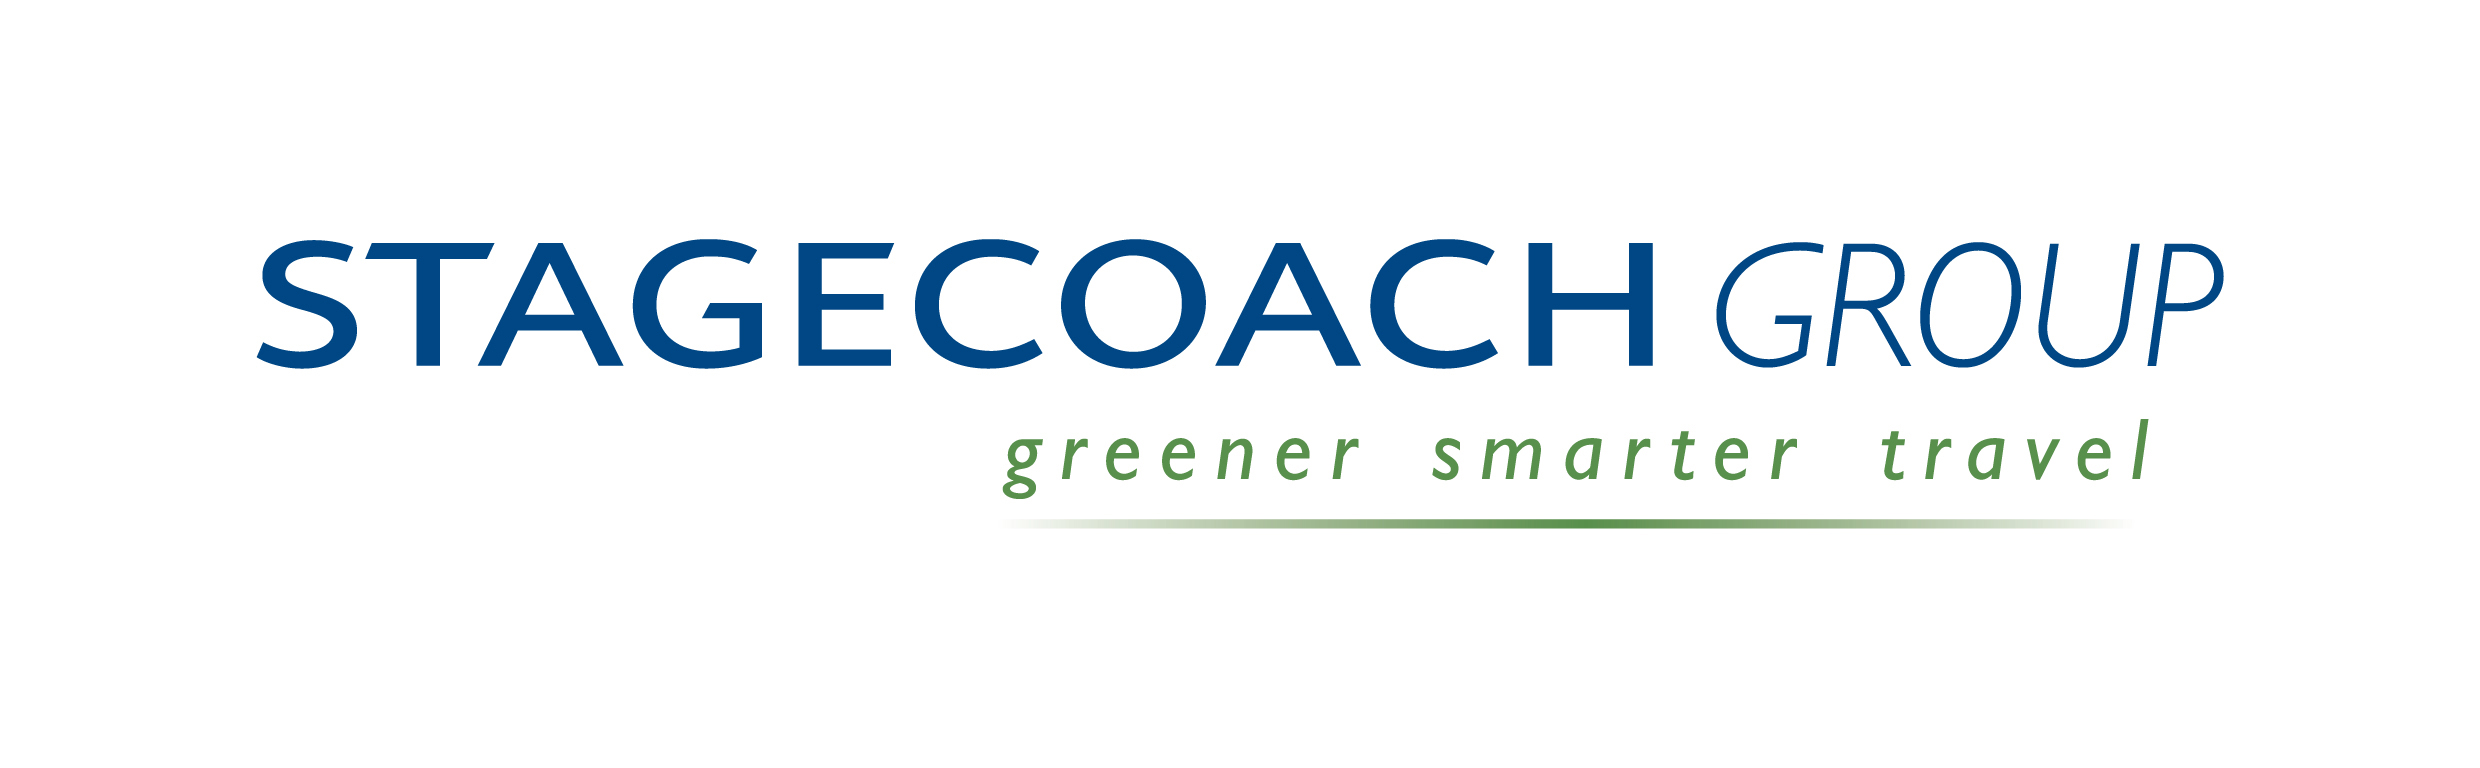 new stagecoach group logo with strapline